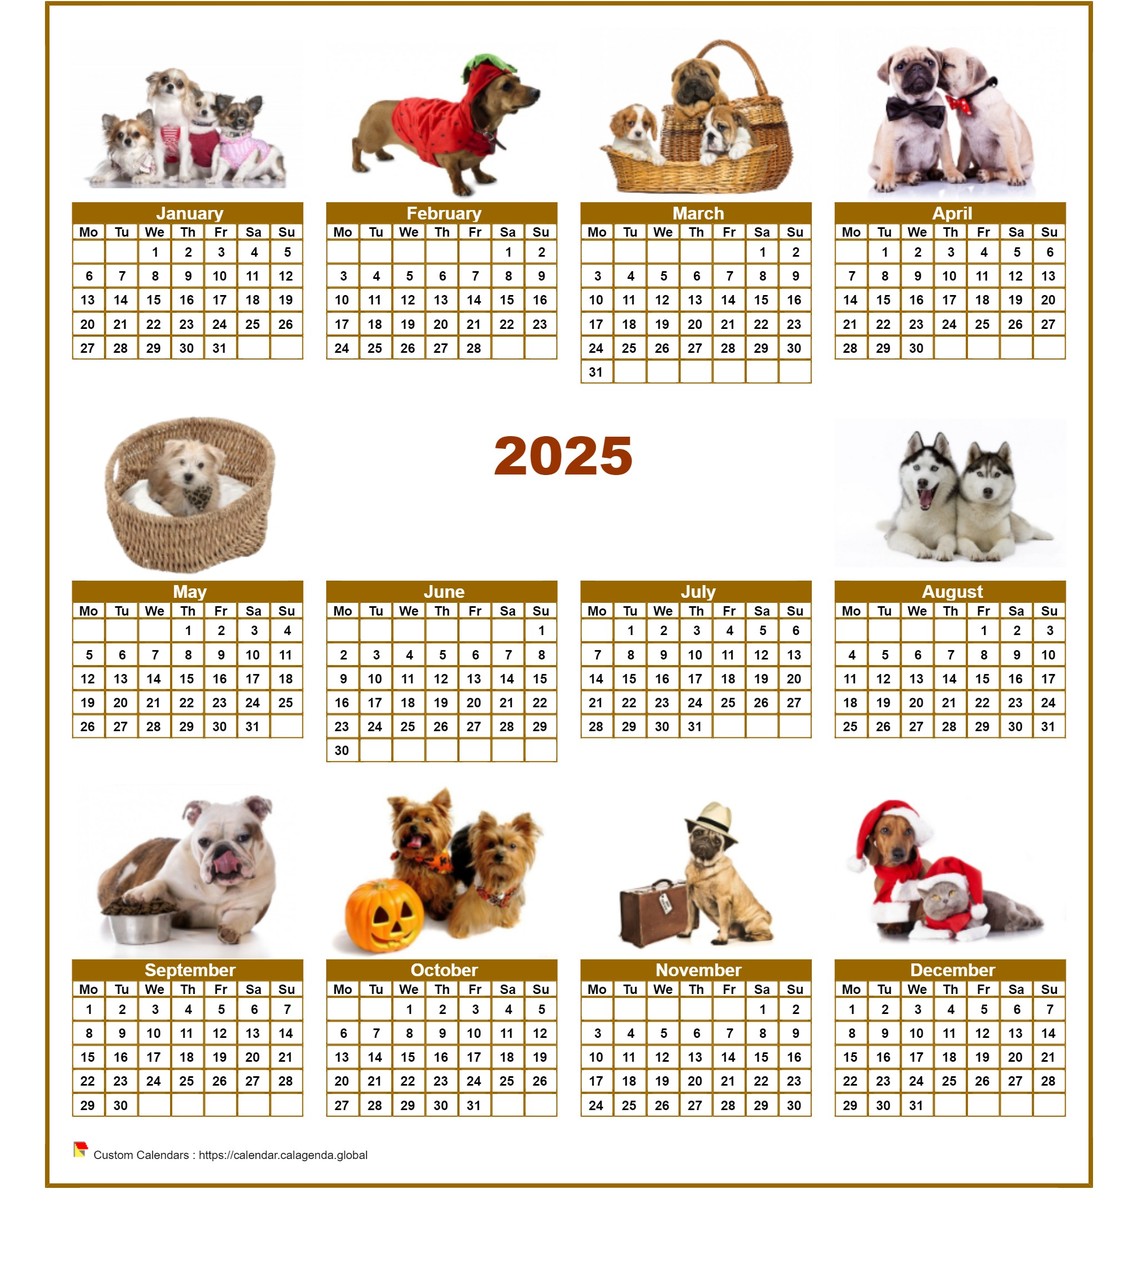 Calendar 2025 annual special 'dogs ' with 10 photos